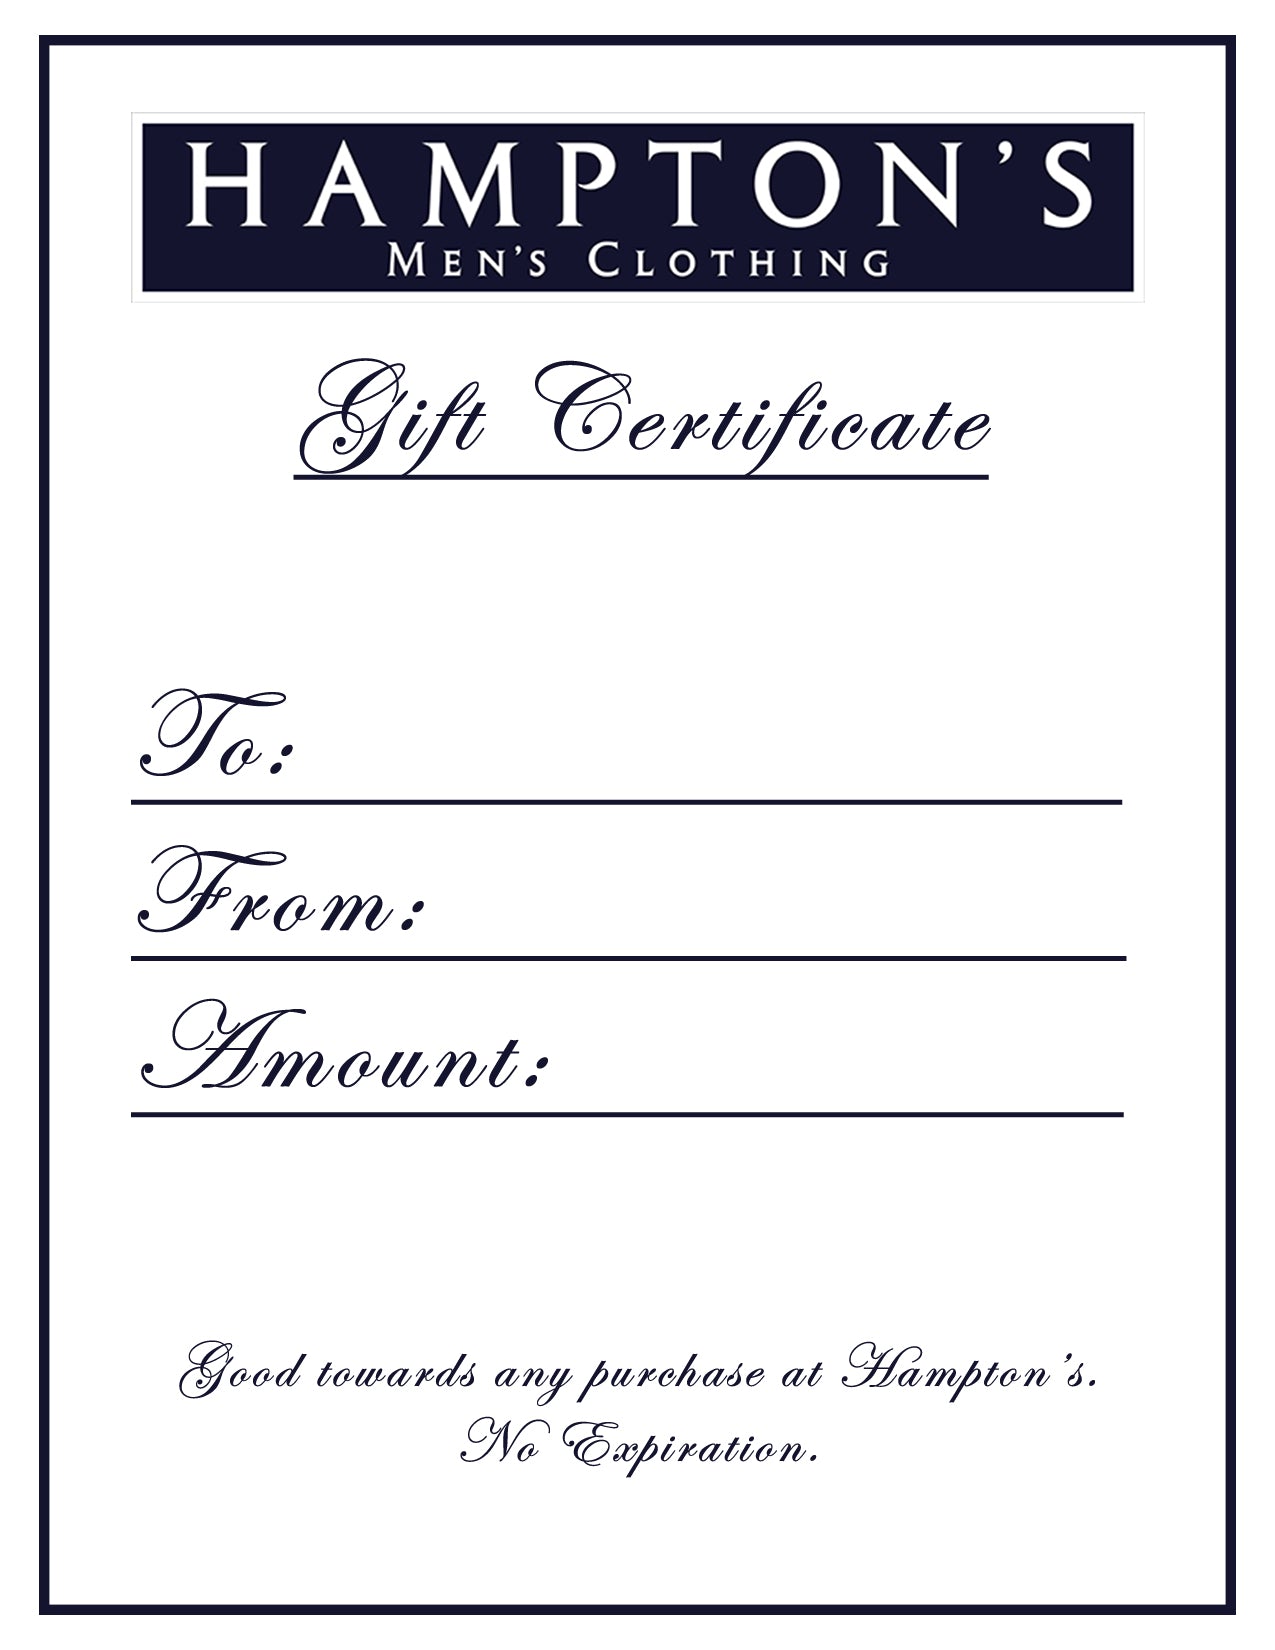 Hampton's Gift Certificate